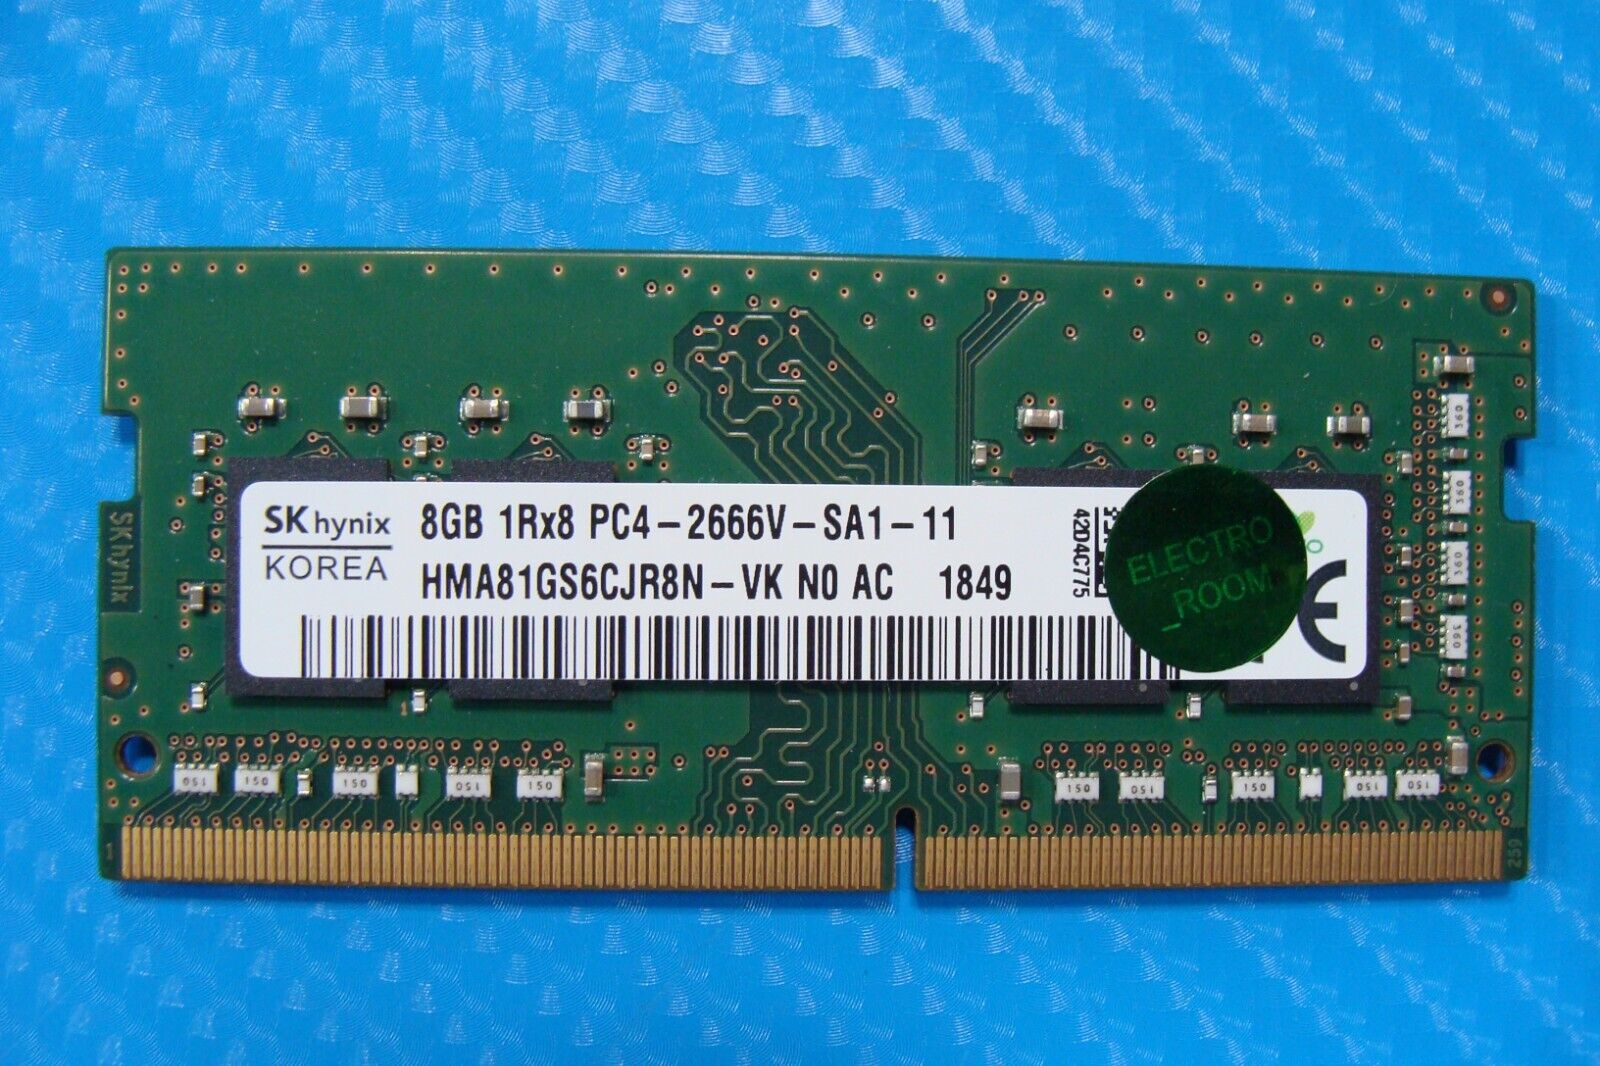 Lenovo E580 SK Hynix 8GB 1Rx8 PC4-2666V Memory RAM SO-DIMM HMA81GS6CJR8N-VK